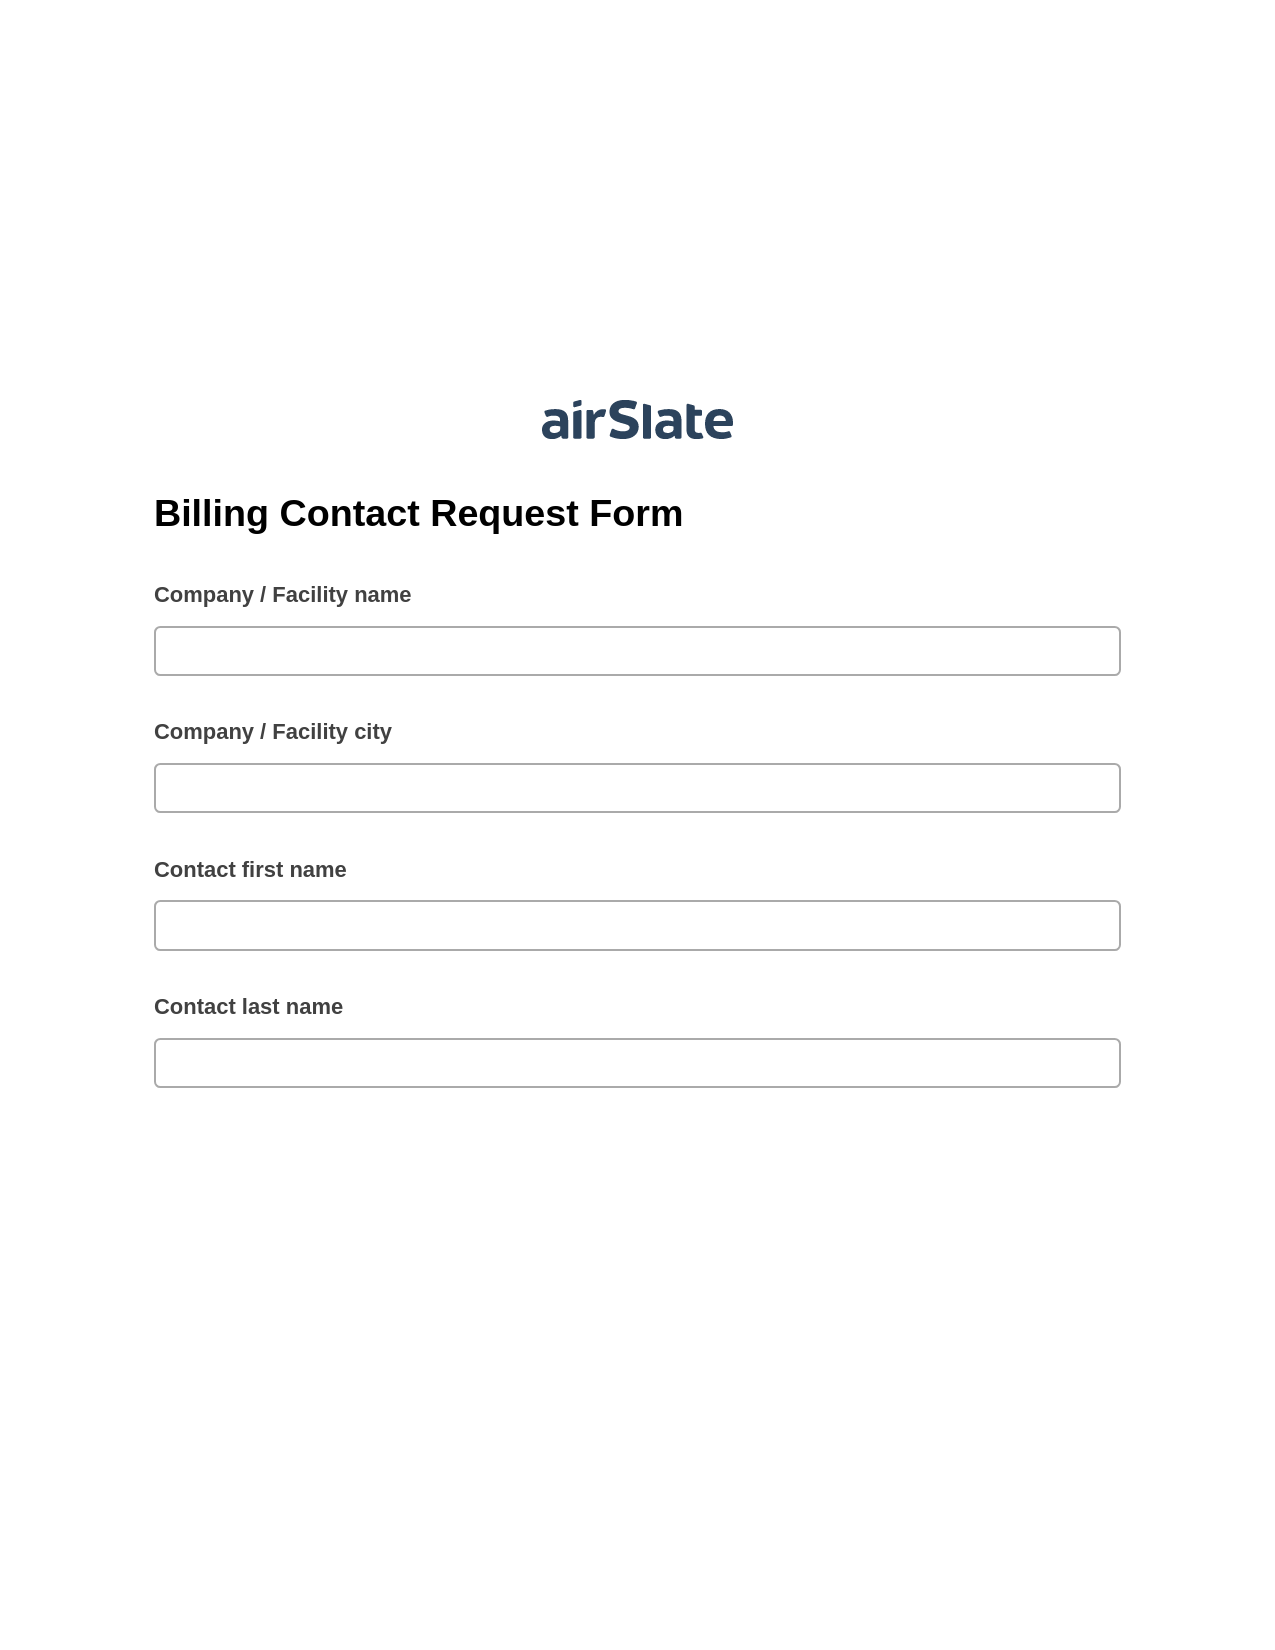 Billing Contact Request Form Pre-fill Dropdowns from Excel Bot, SendGrid send Campaign bot, Dropbox Bot